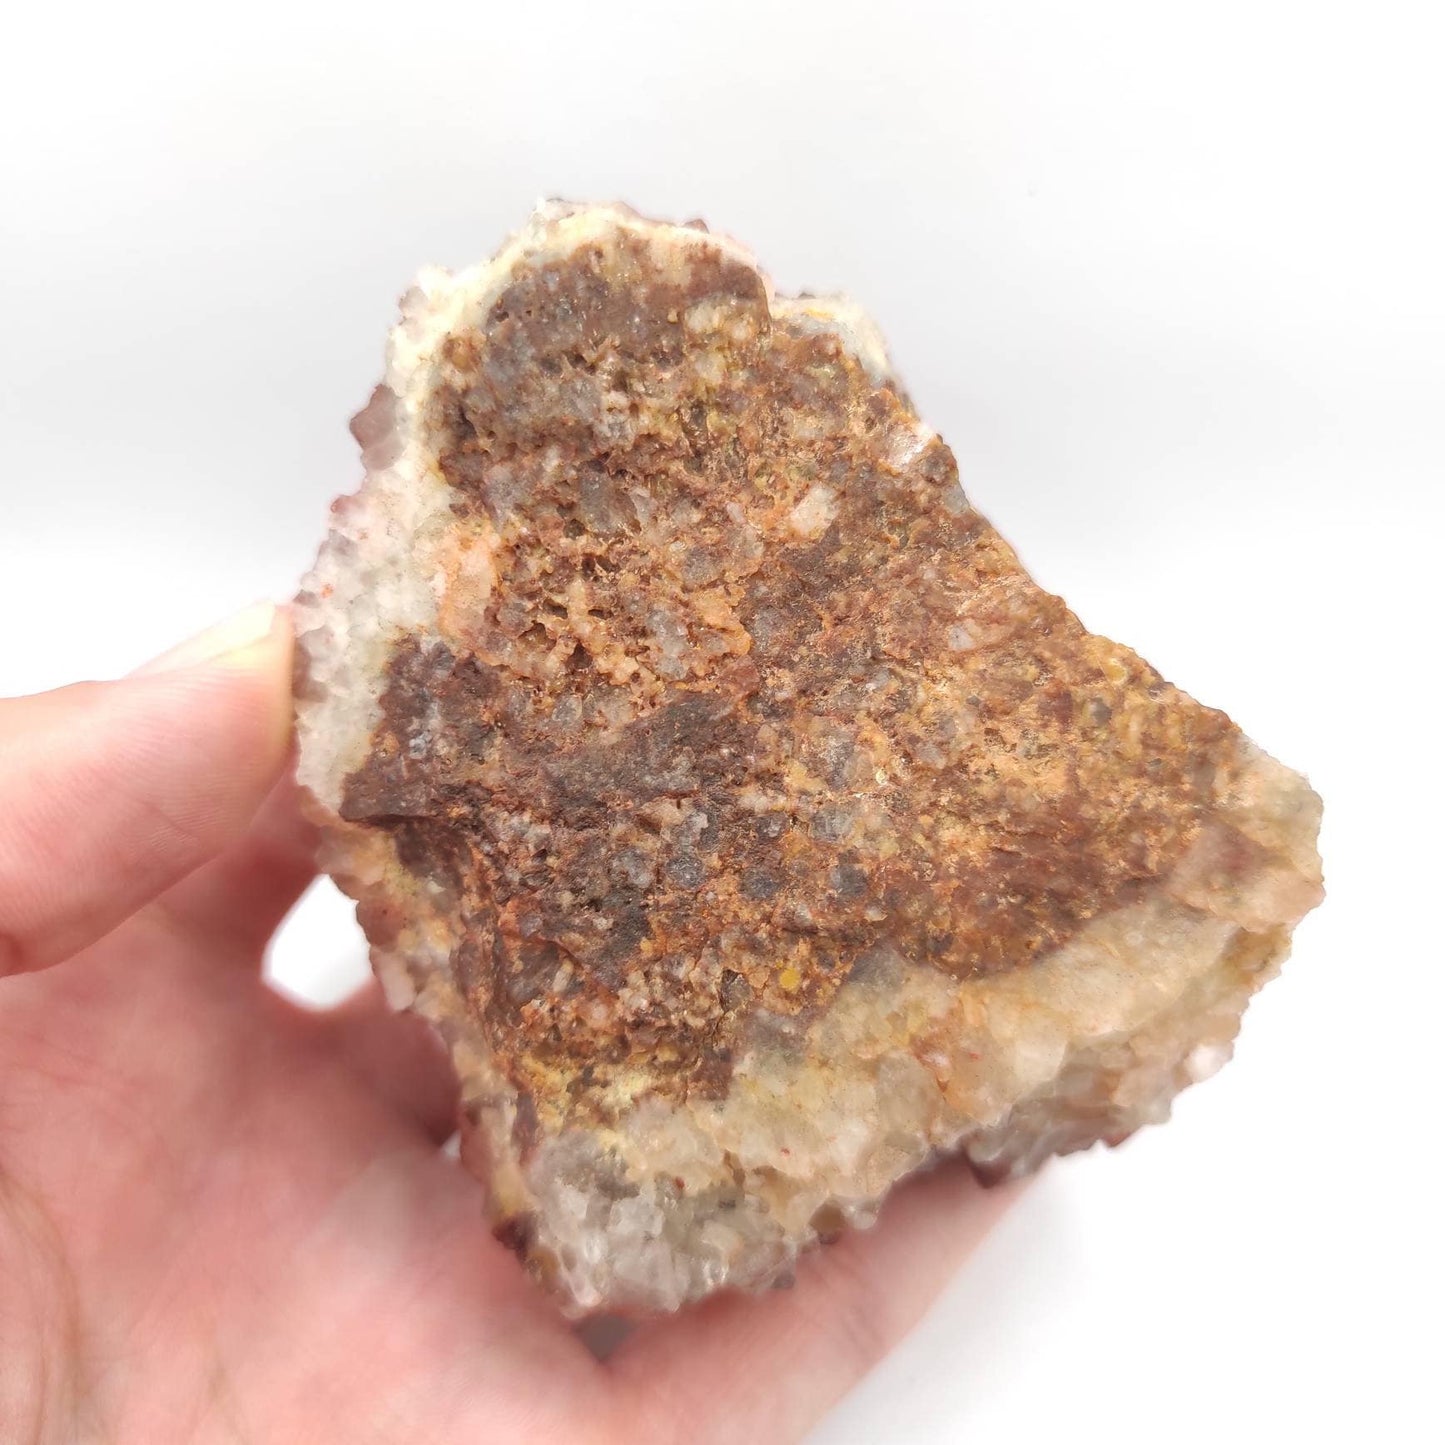 287g Hematite Quartz from Tinjdad, Morocco - Natural Red Hematite Quartz Crystal - Hematite Crystals - Raw Quartz Cluster - Rough Minerals